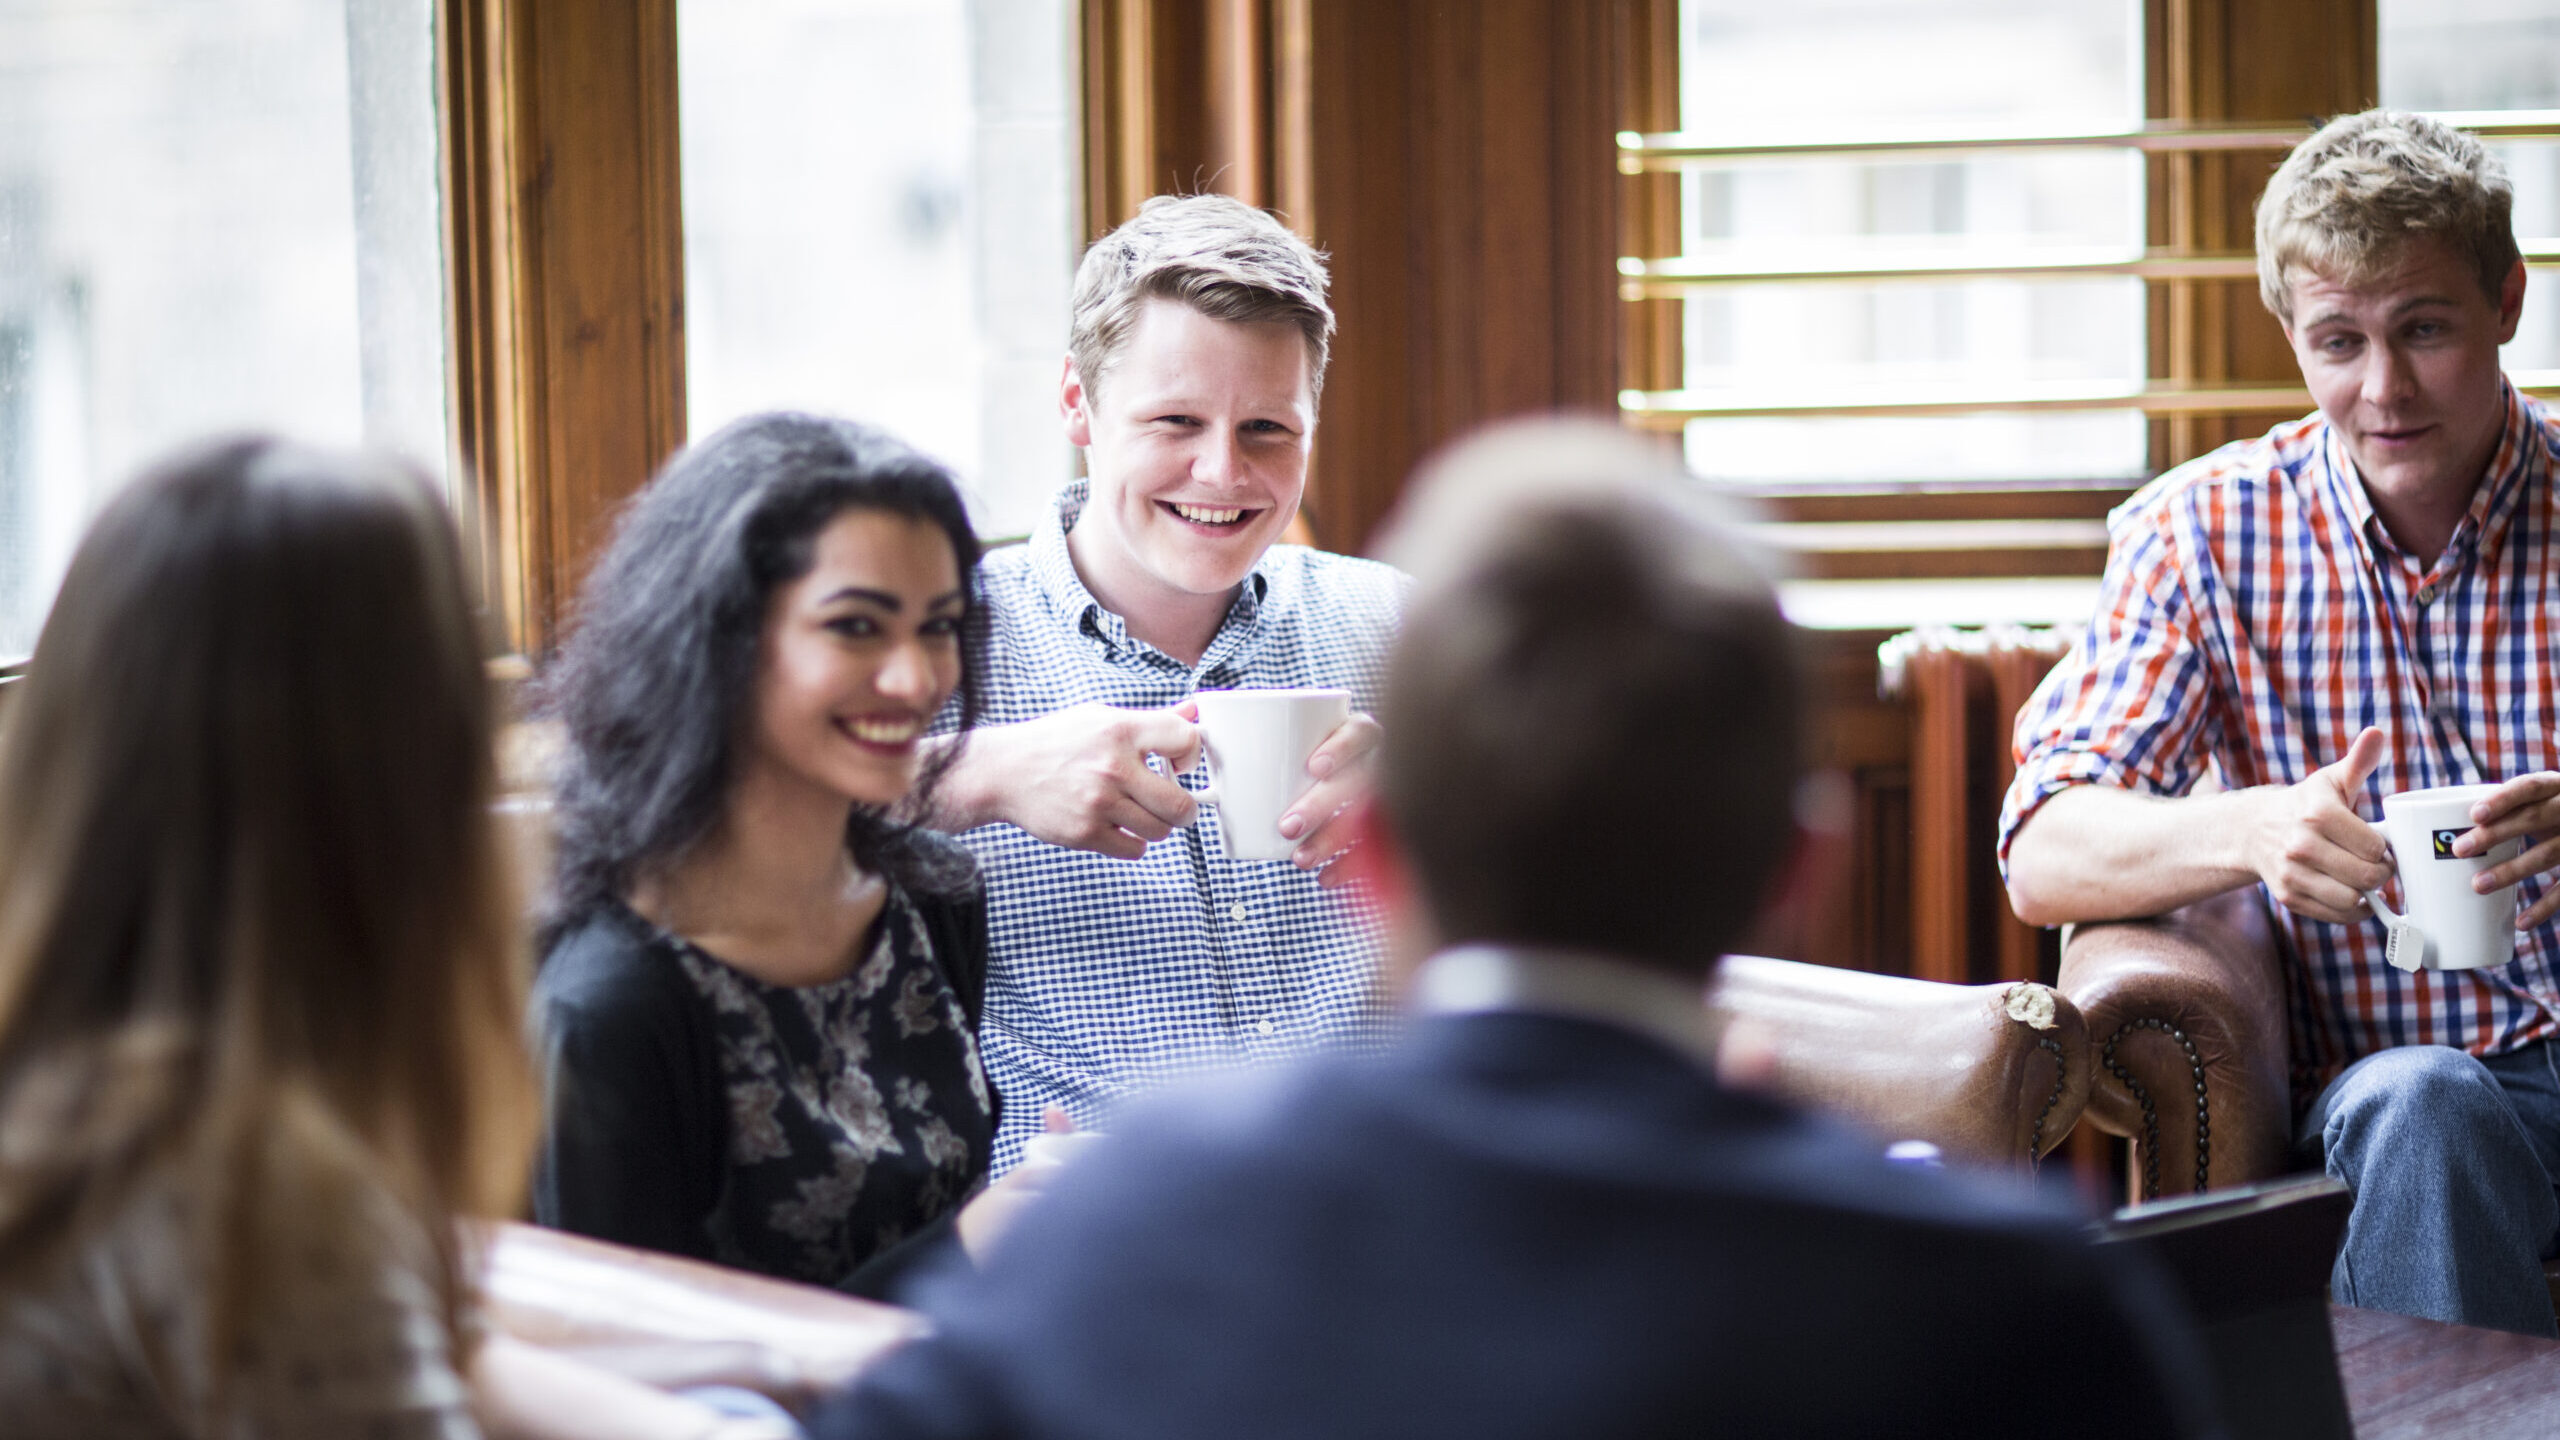 University of Edinburgh postgraduate students talking at a cafe